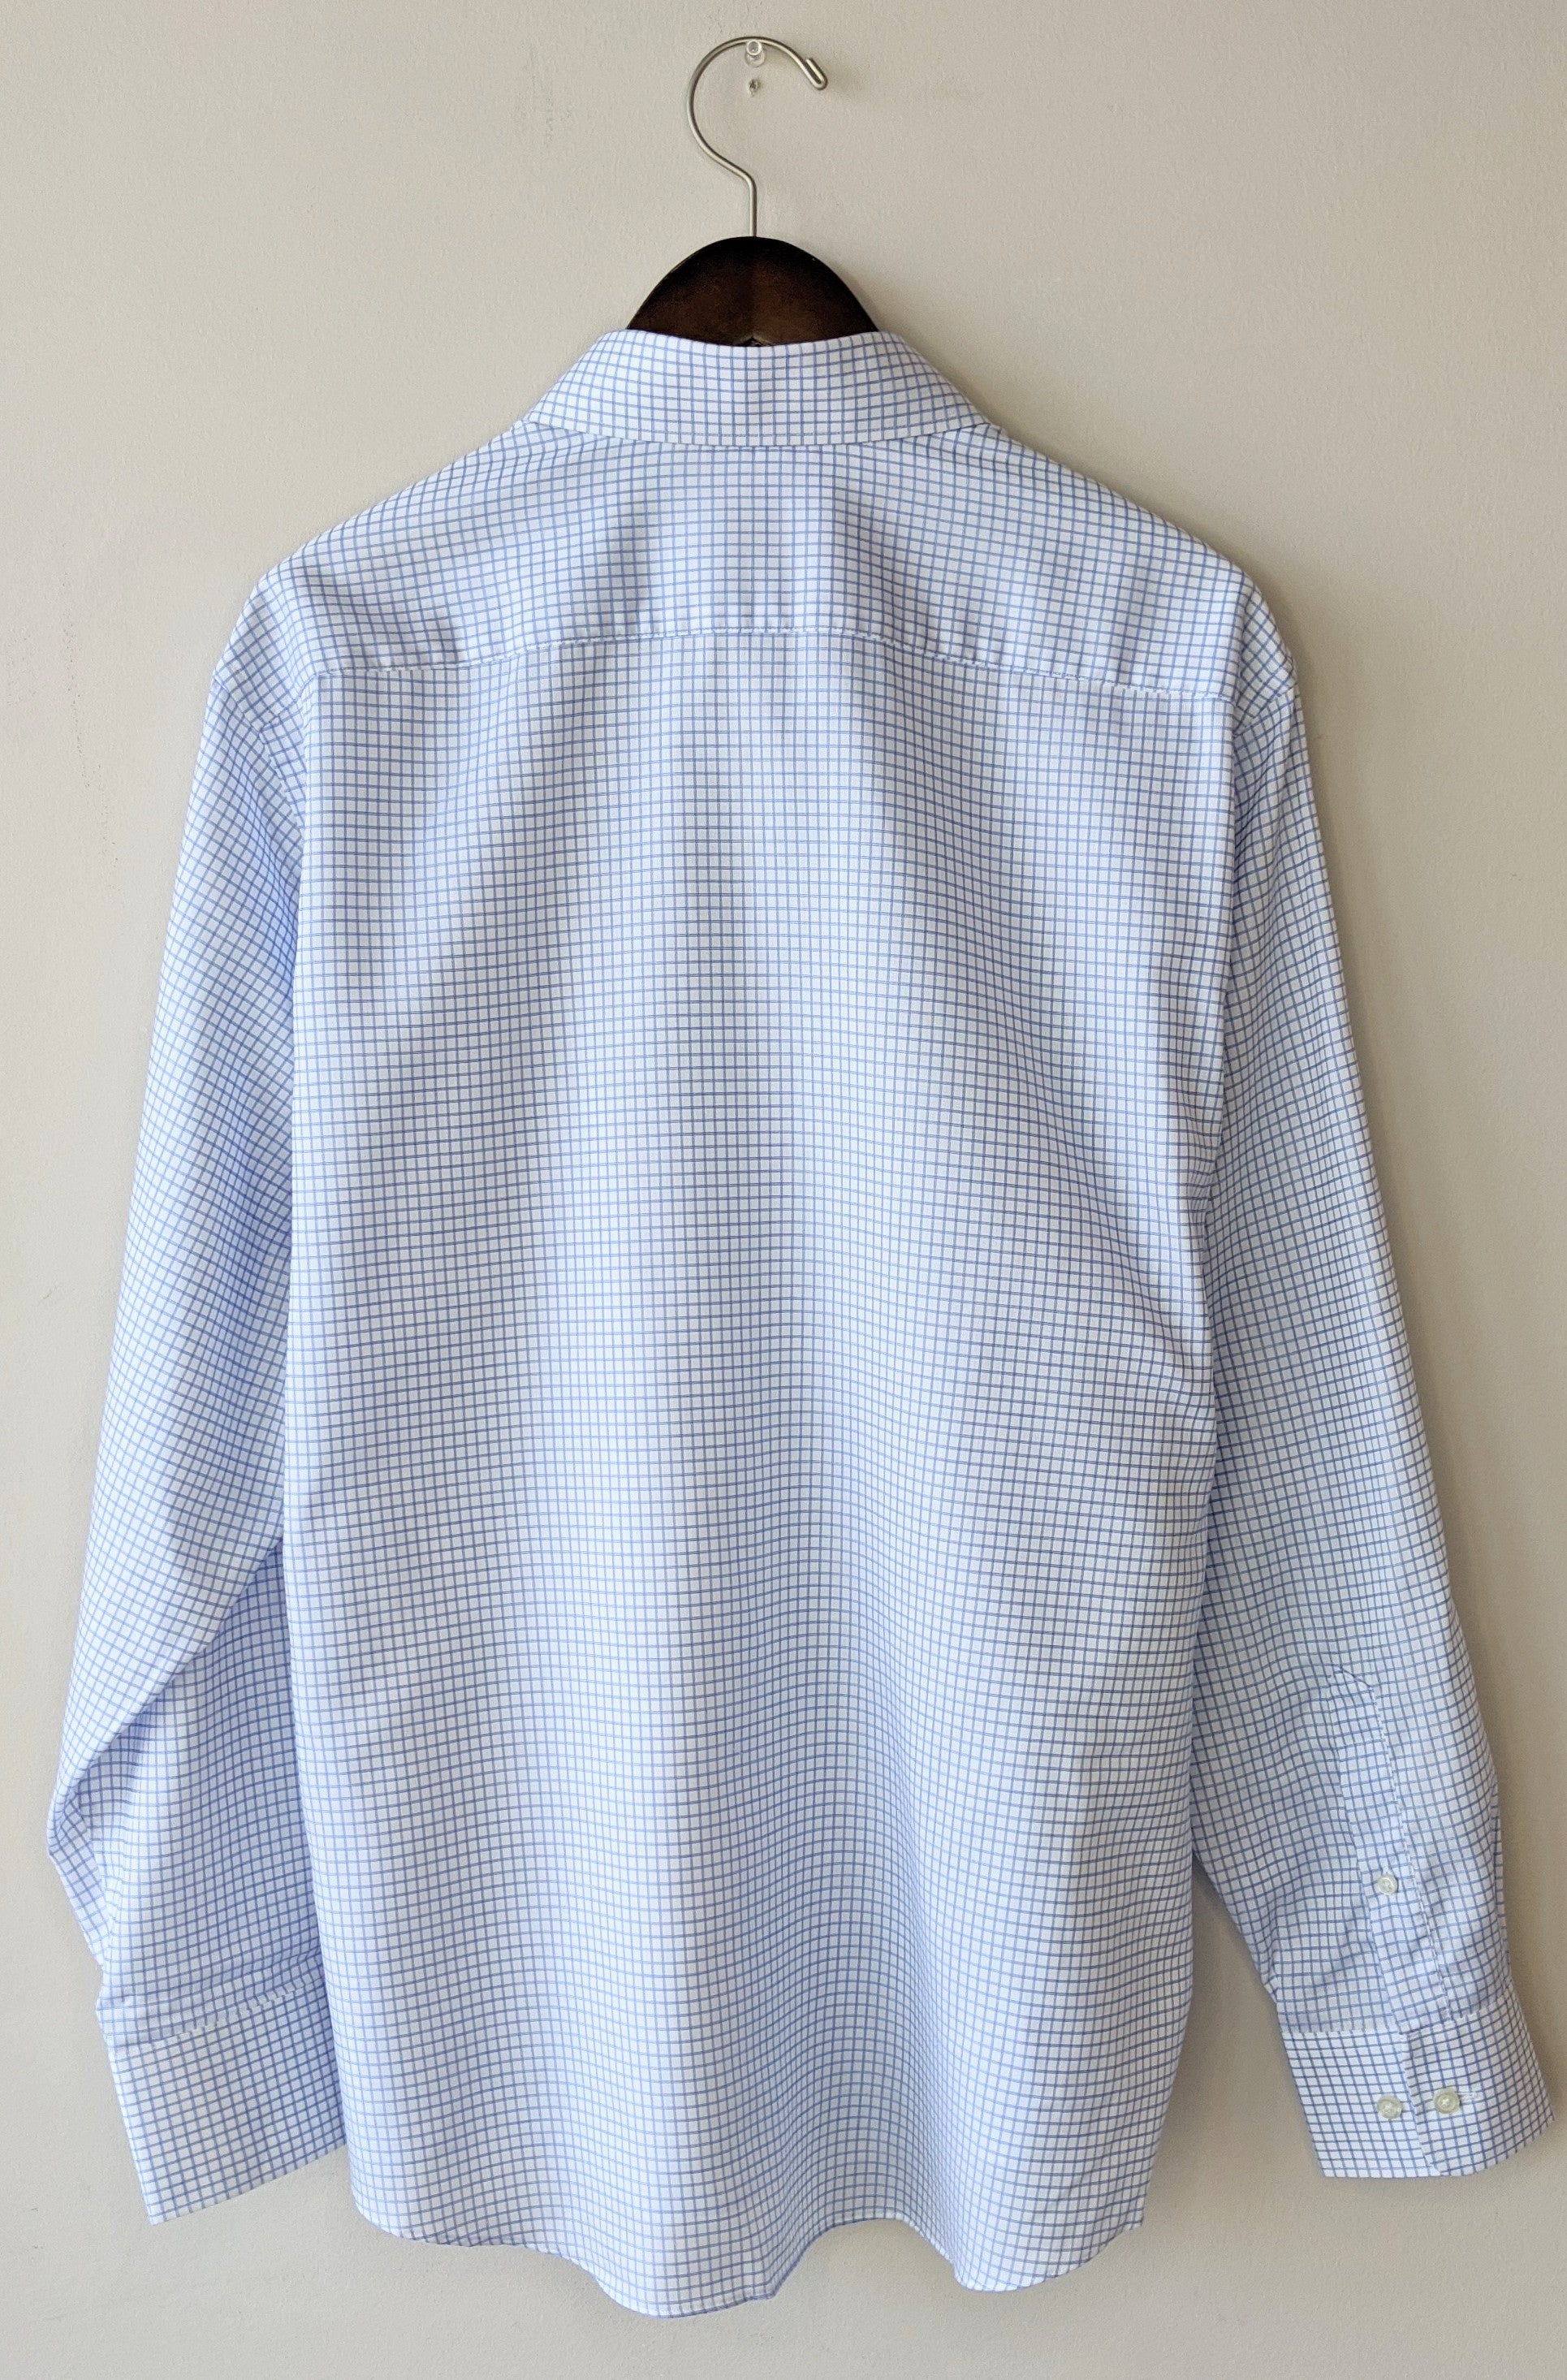 Chatham Chino Company Grid Check Grosgrain Shirt